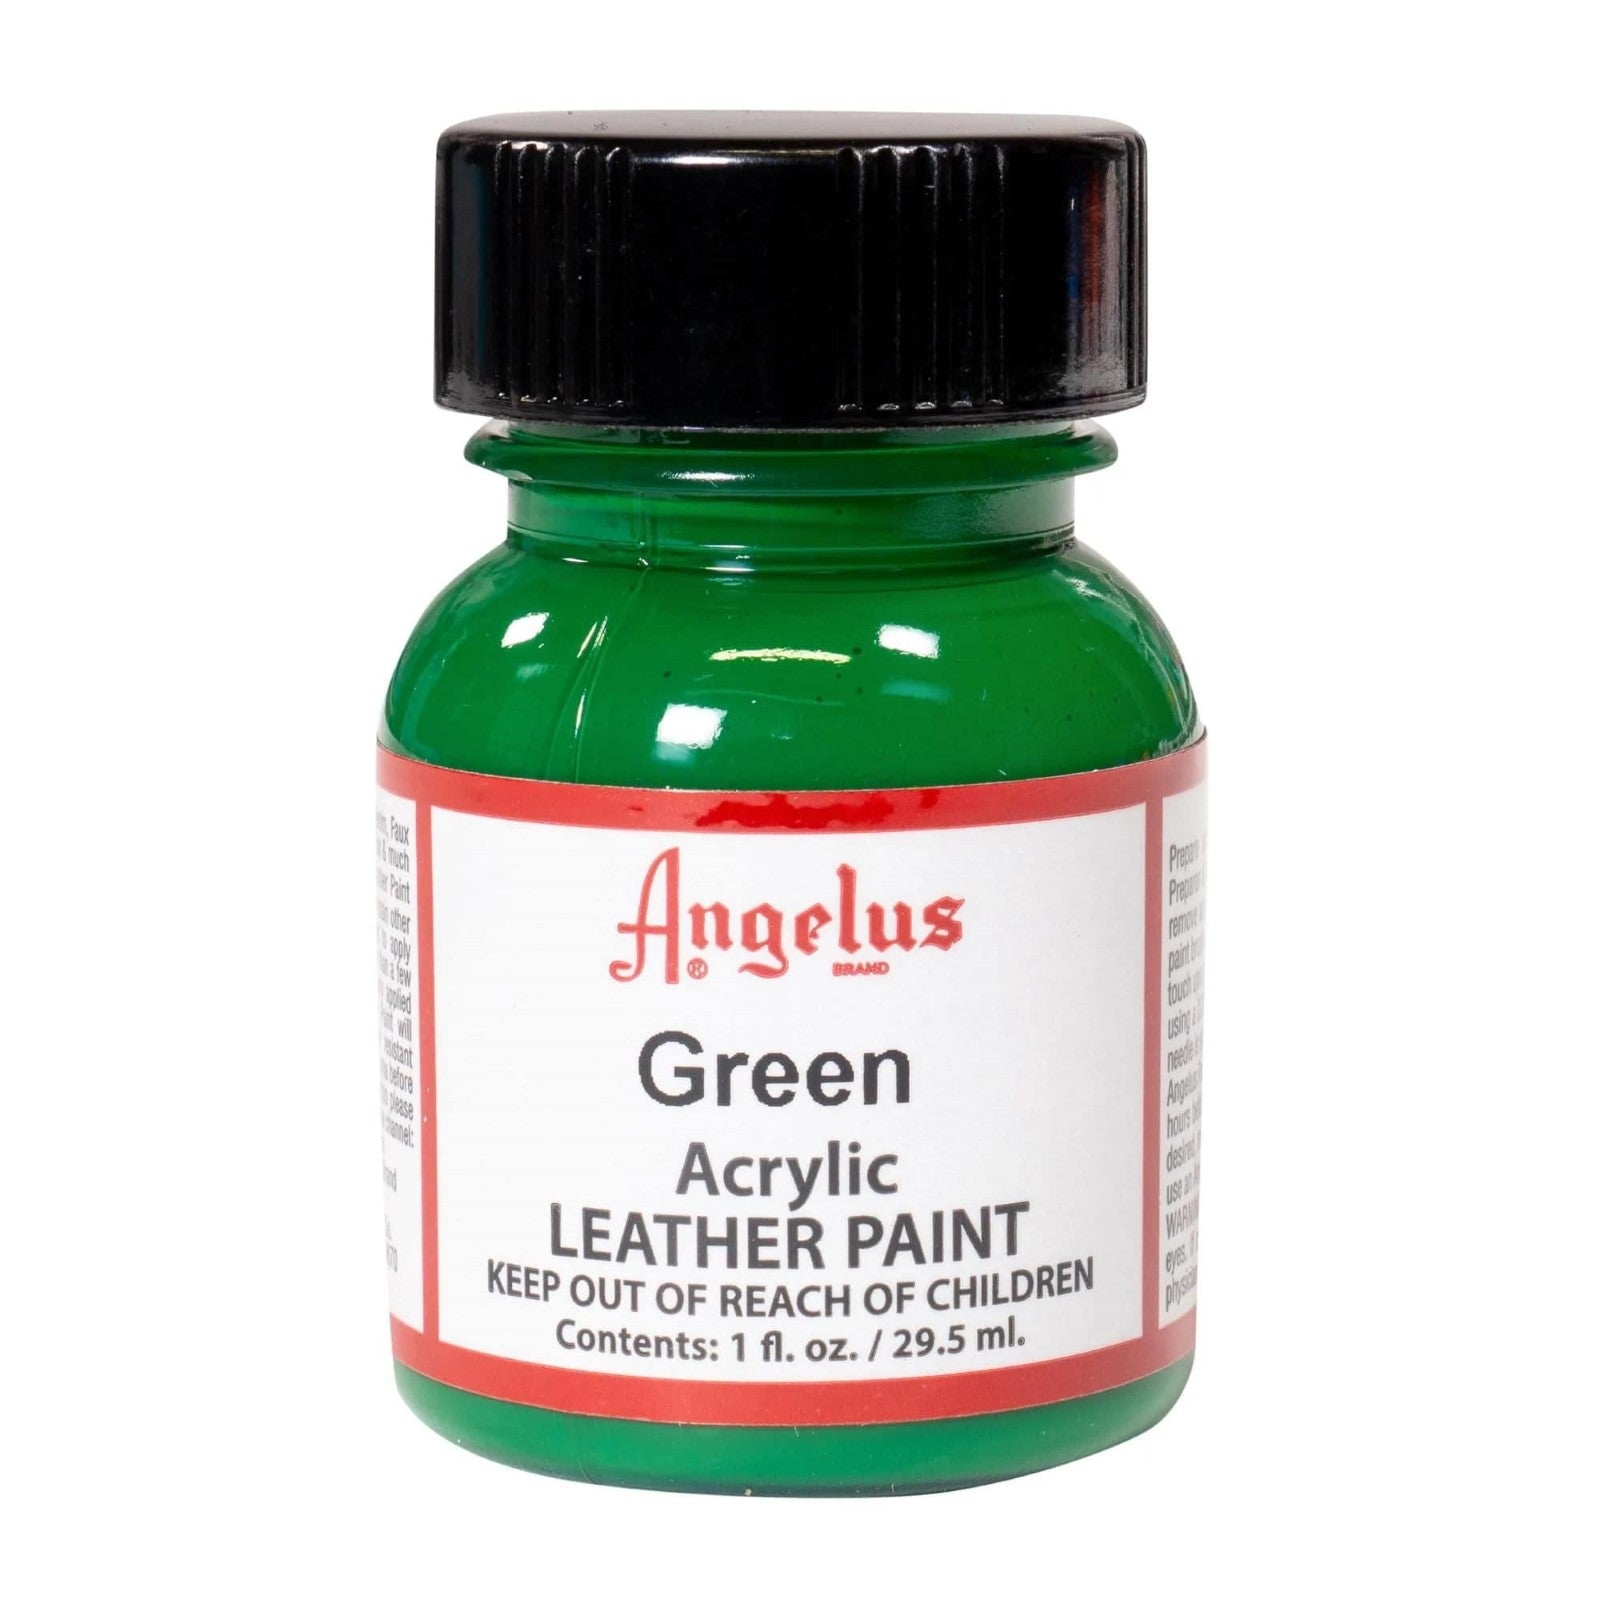 Angelus Acrylic Leather Paint 4oz Green